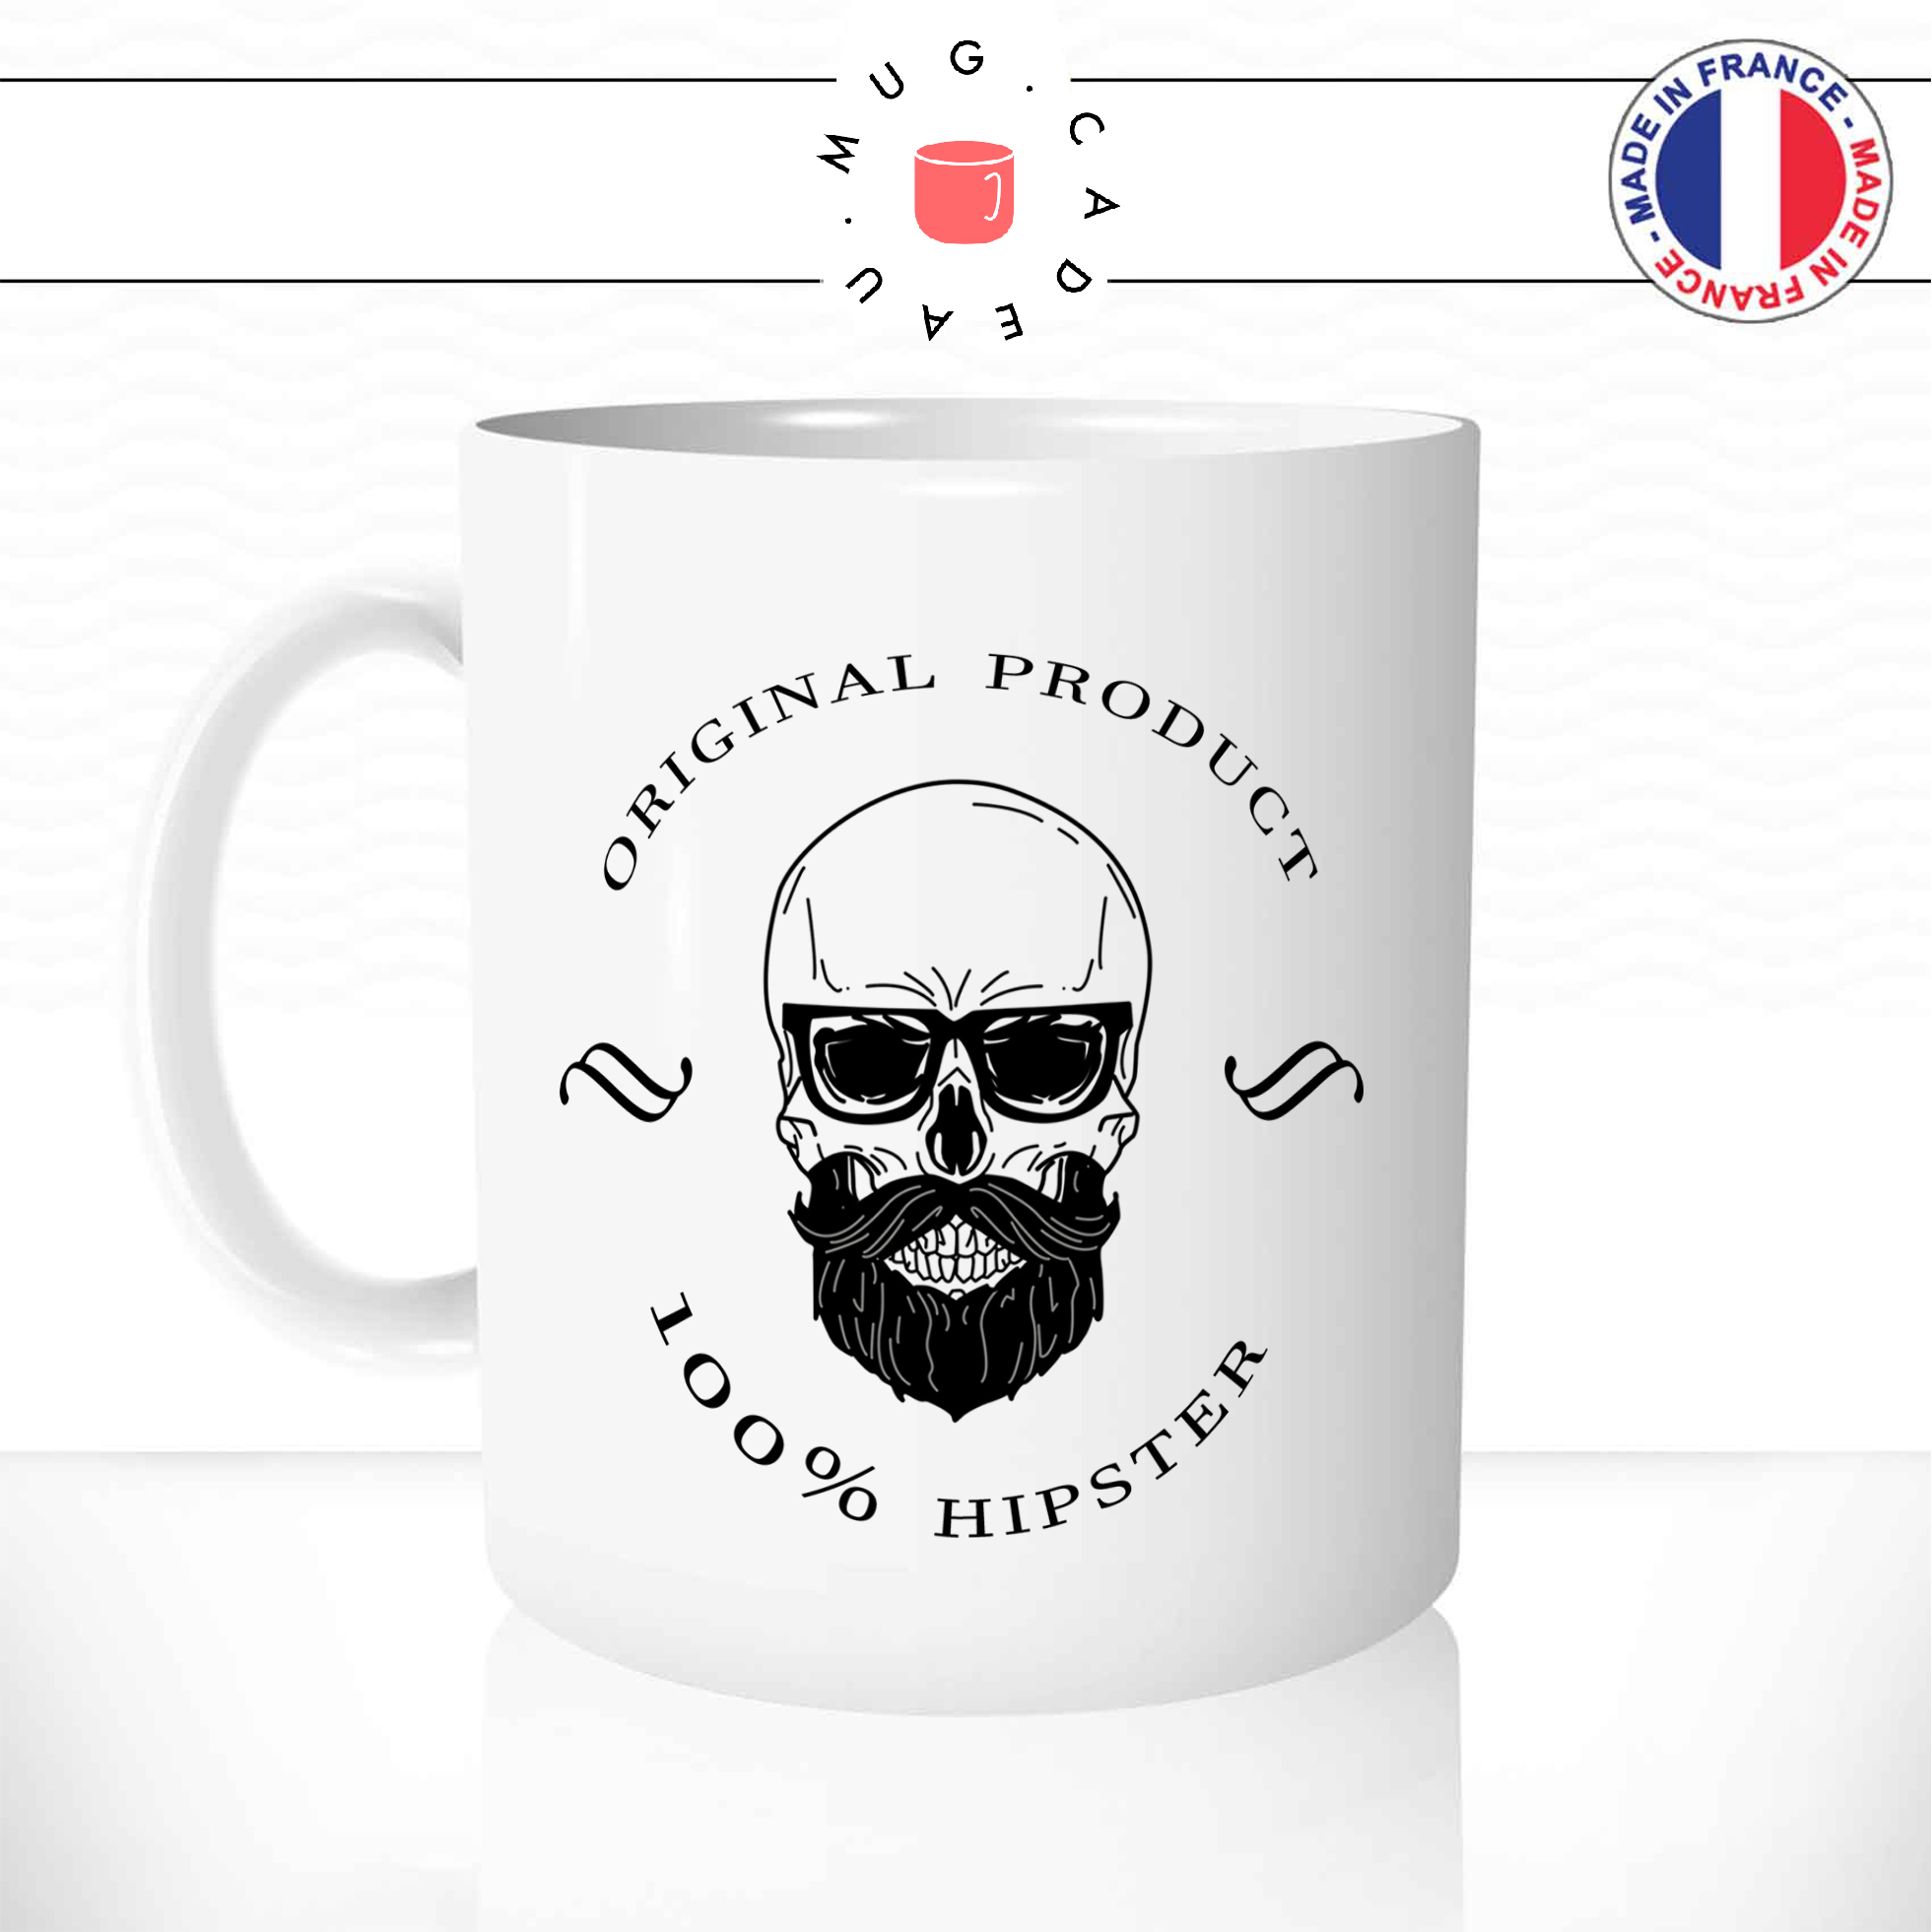 Mug Original Product 100% Hipster